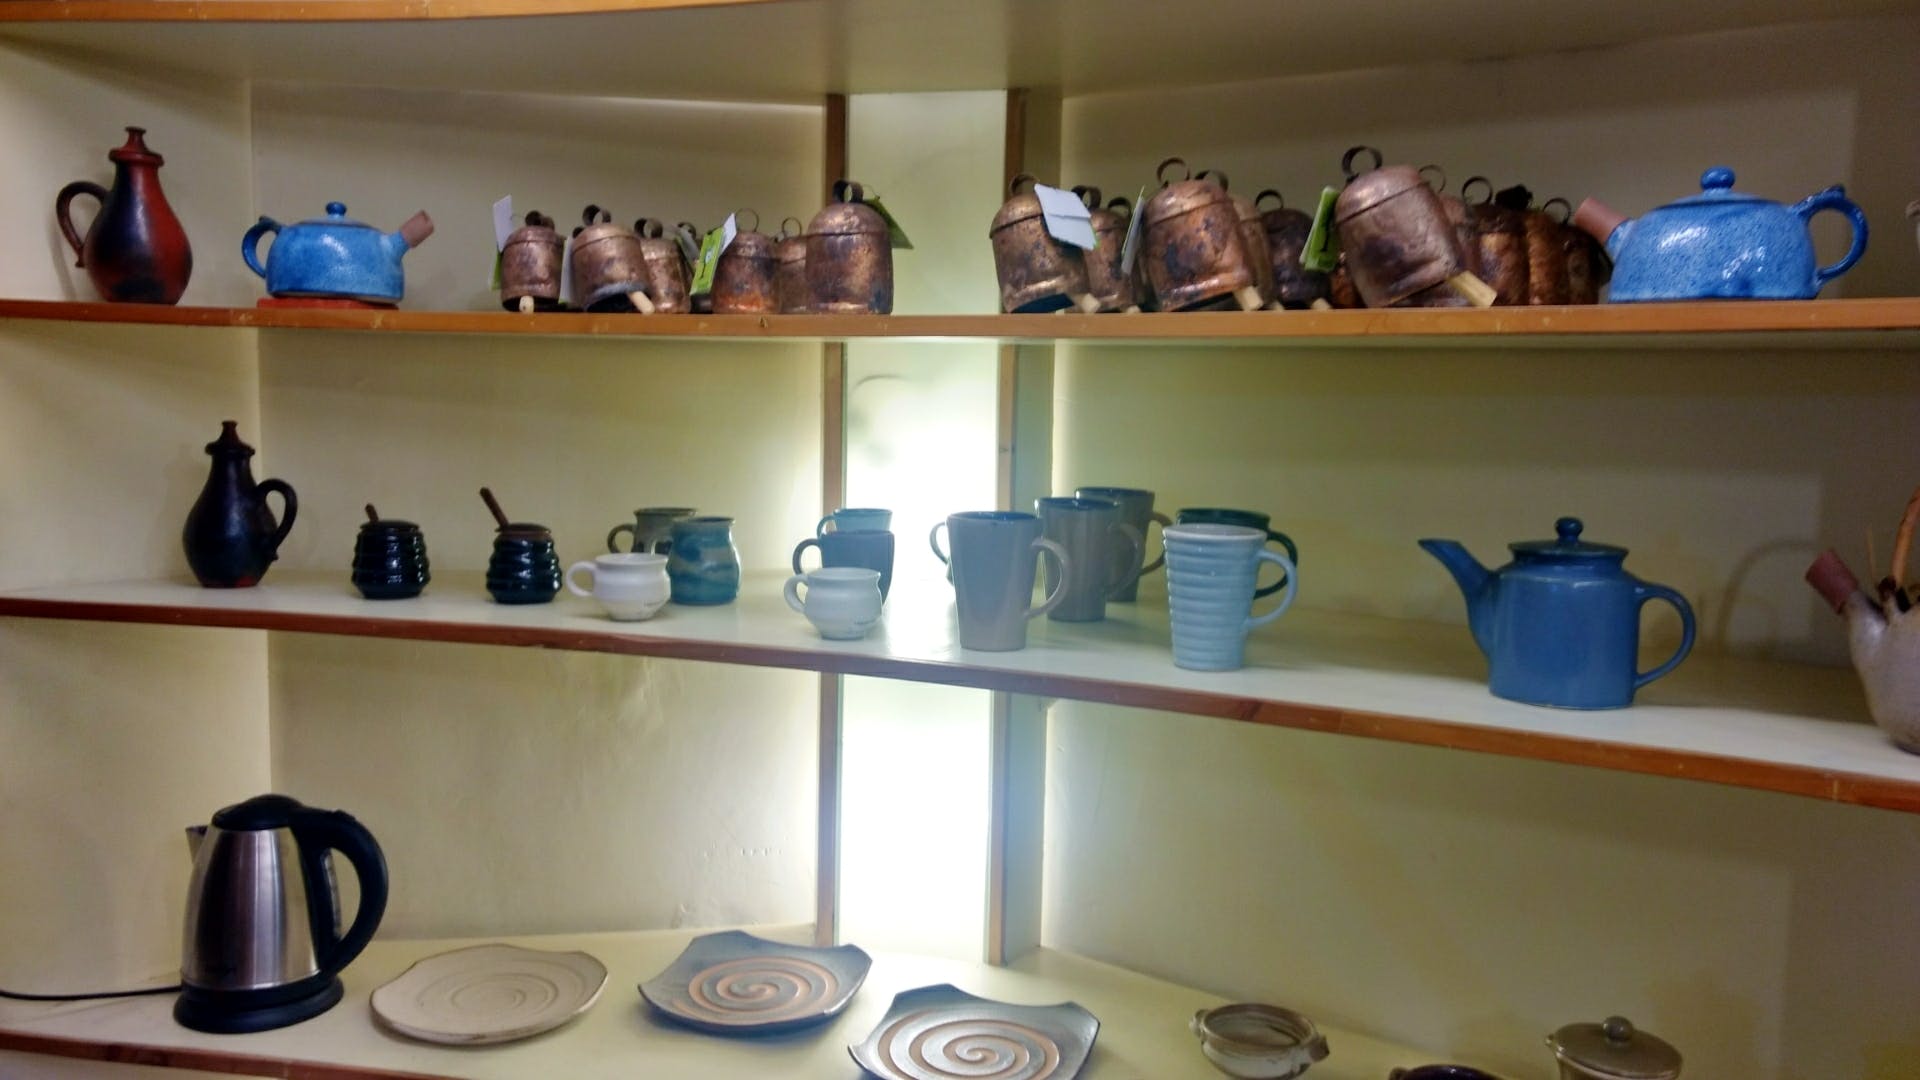 Shelf,Shelving,Room,Furniture,Ceramic,Collection,Tableware,Pottery,Porcelain,Cupboard